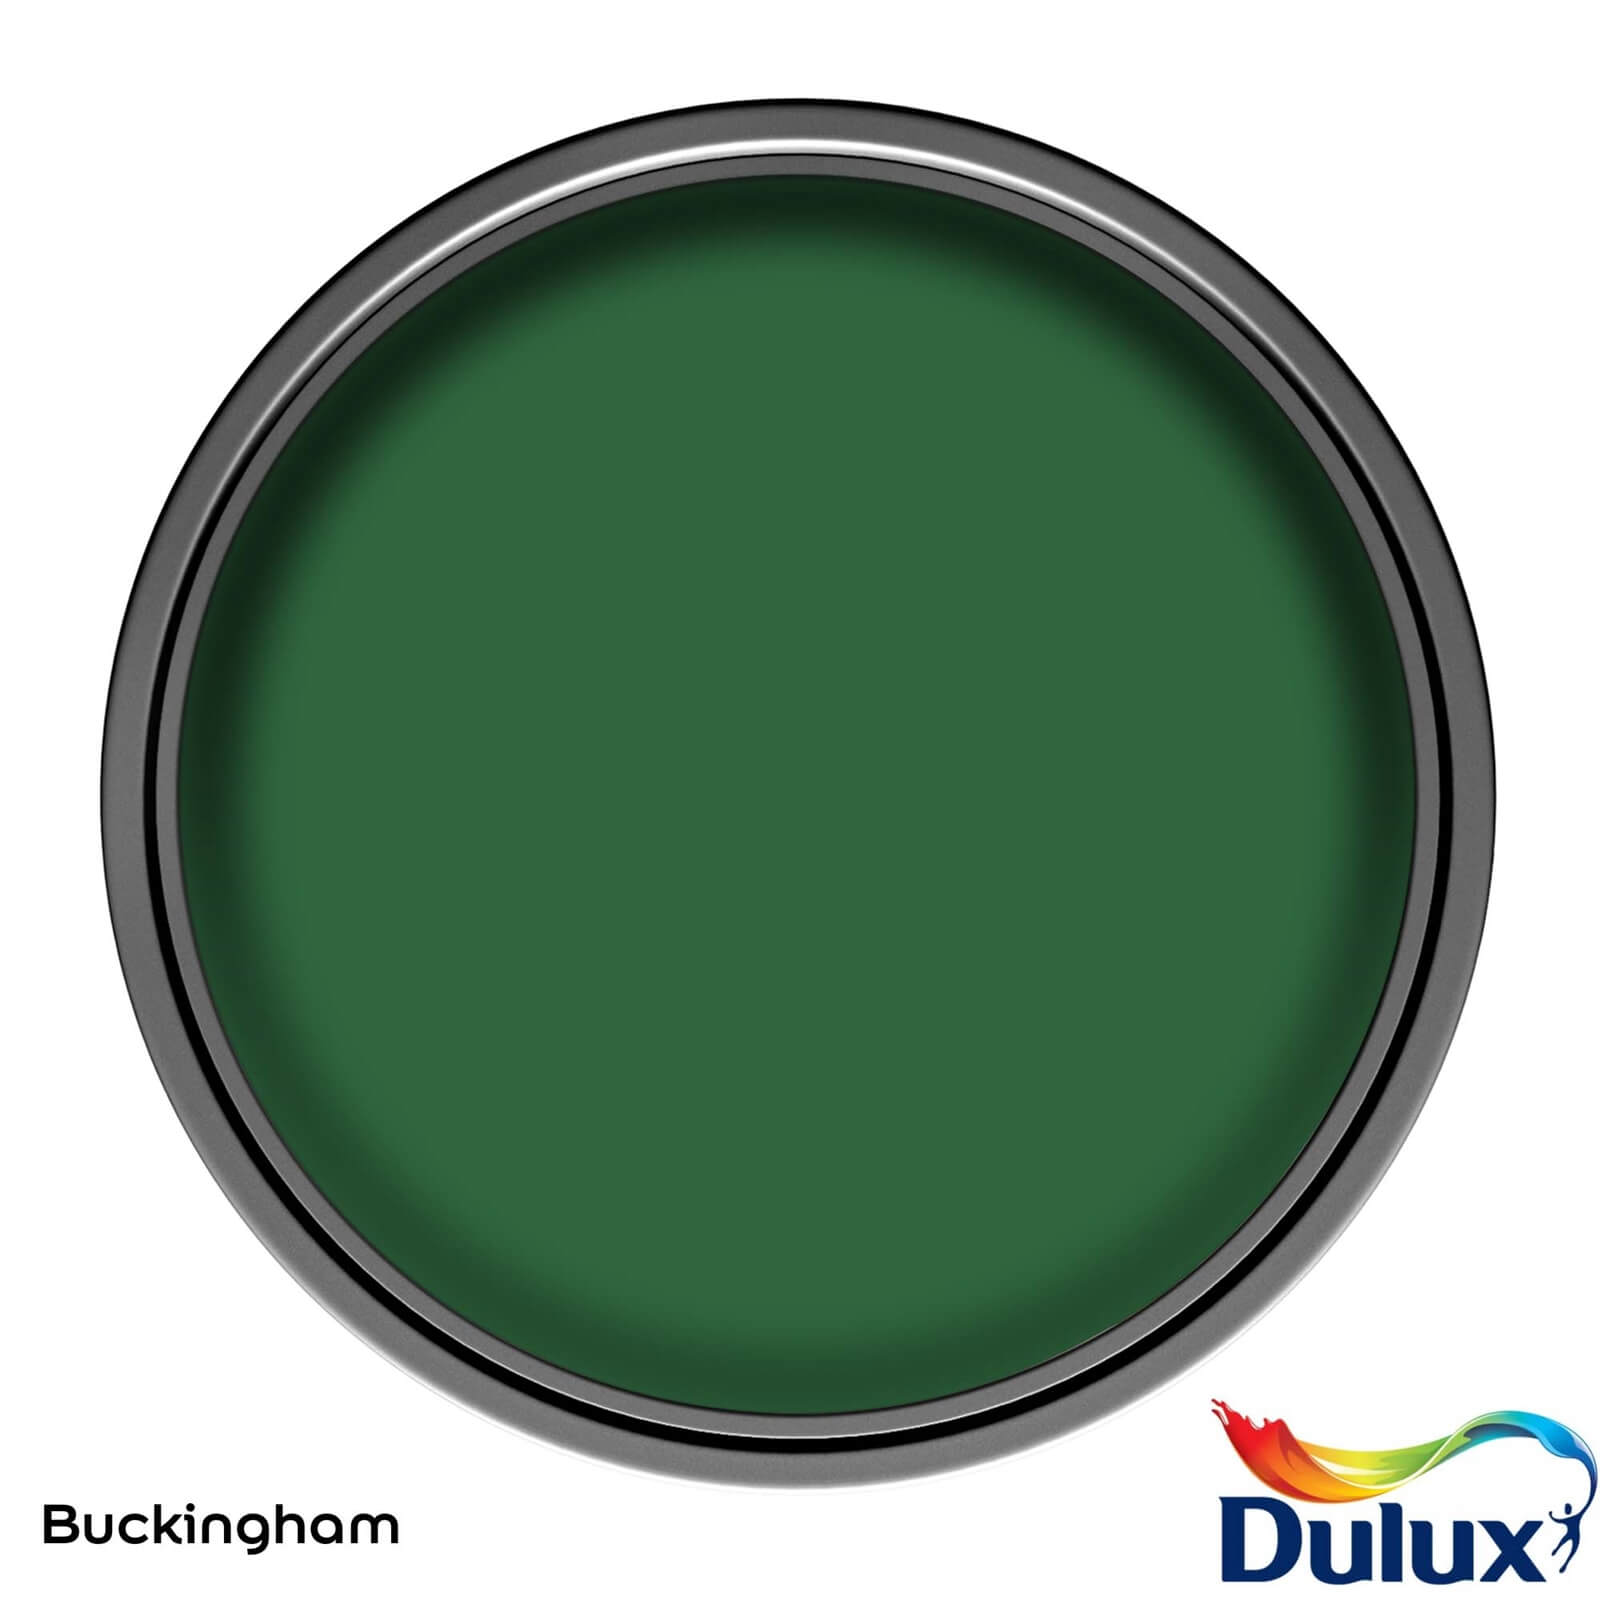 Dulux Weathershield Exterior Gloss Paint Buckingham - 750ml